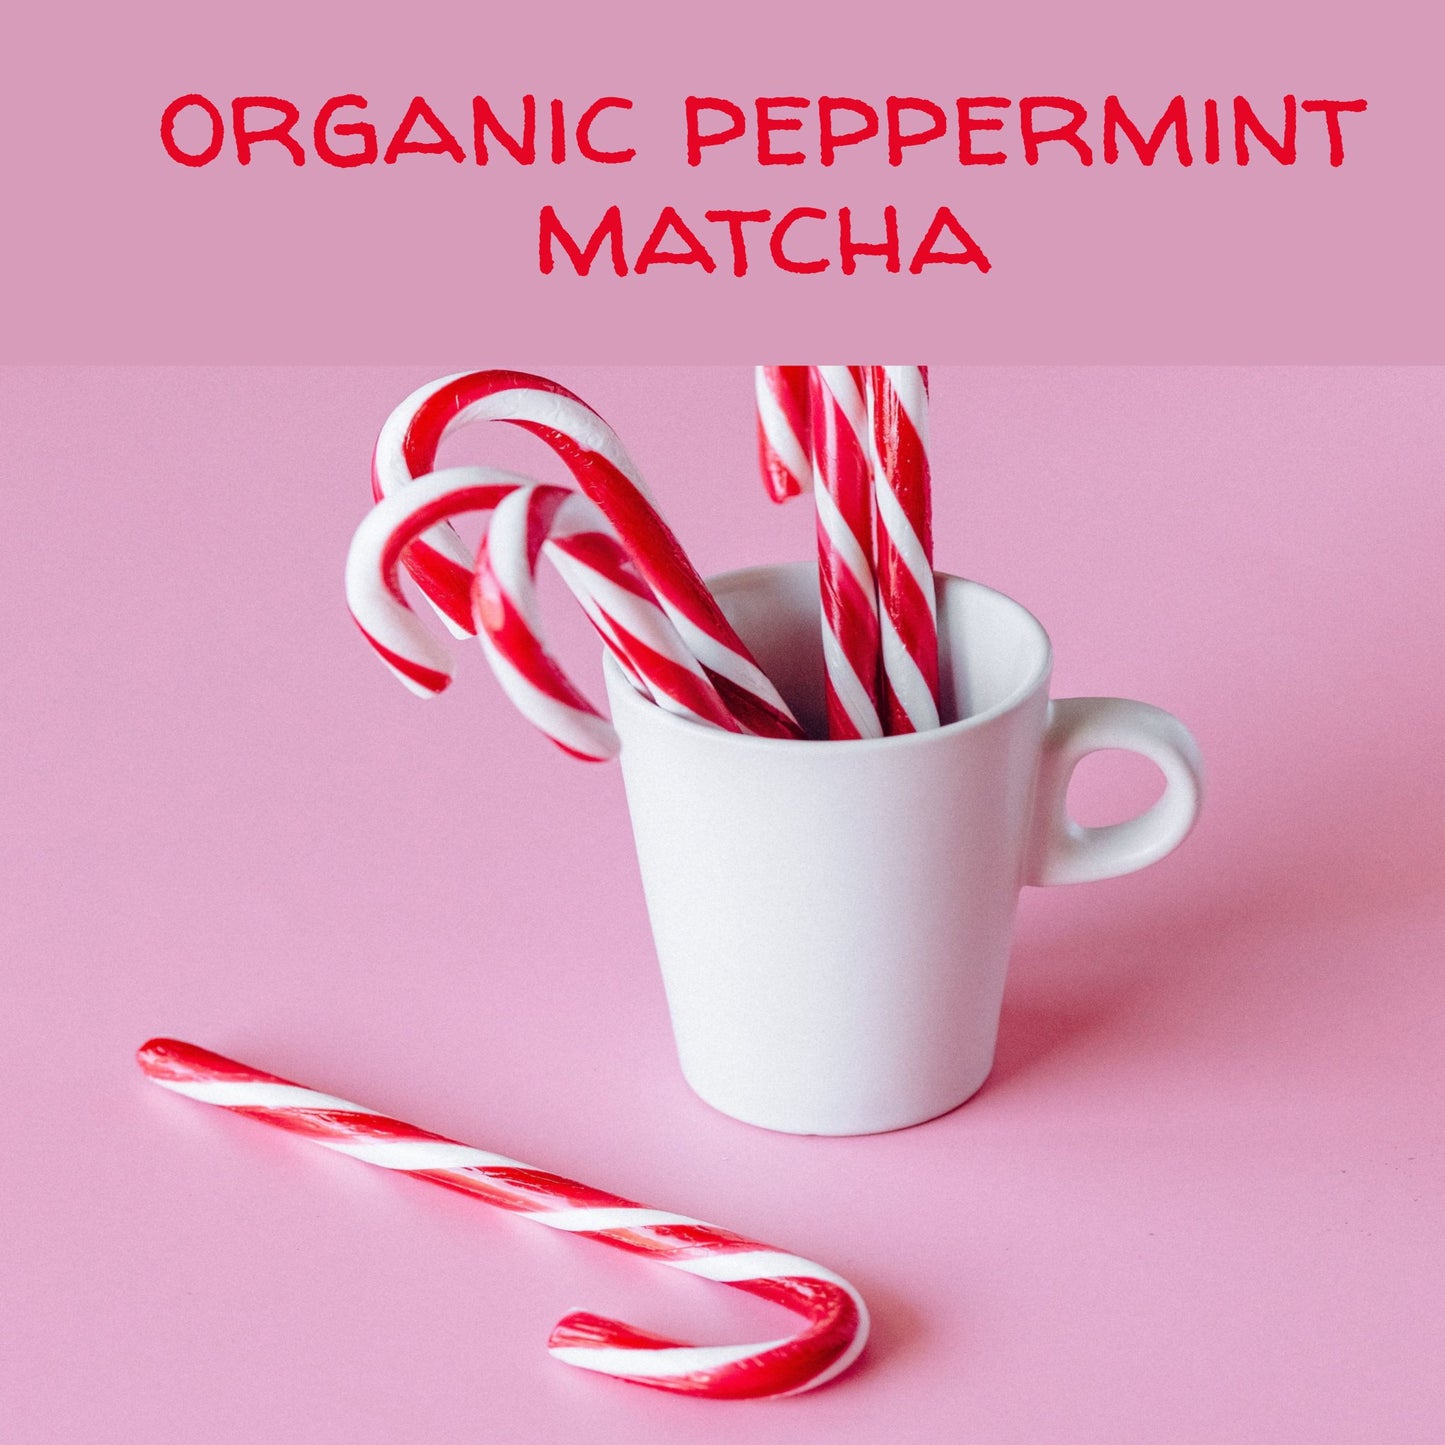 Gratefully Organic Peppermint Matcha Powder, 1 oz. matcha The Grateful Tea Co. 